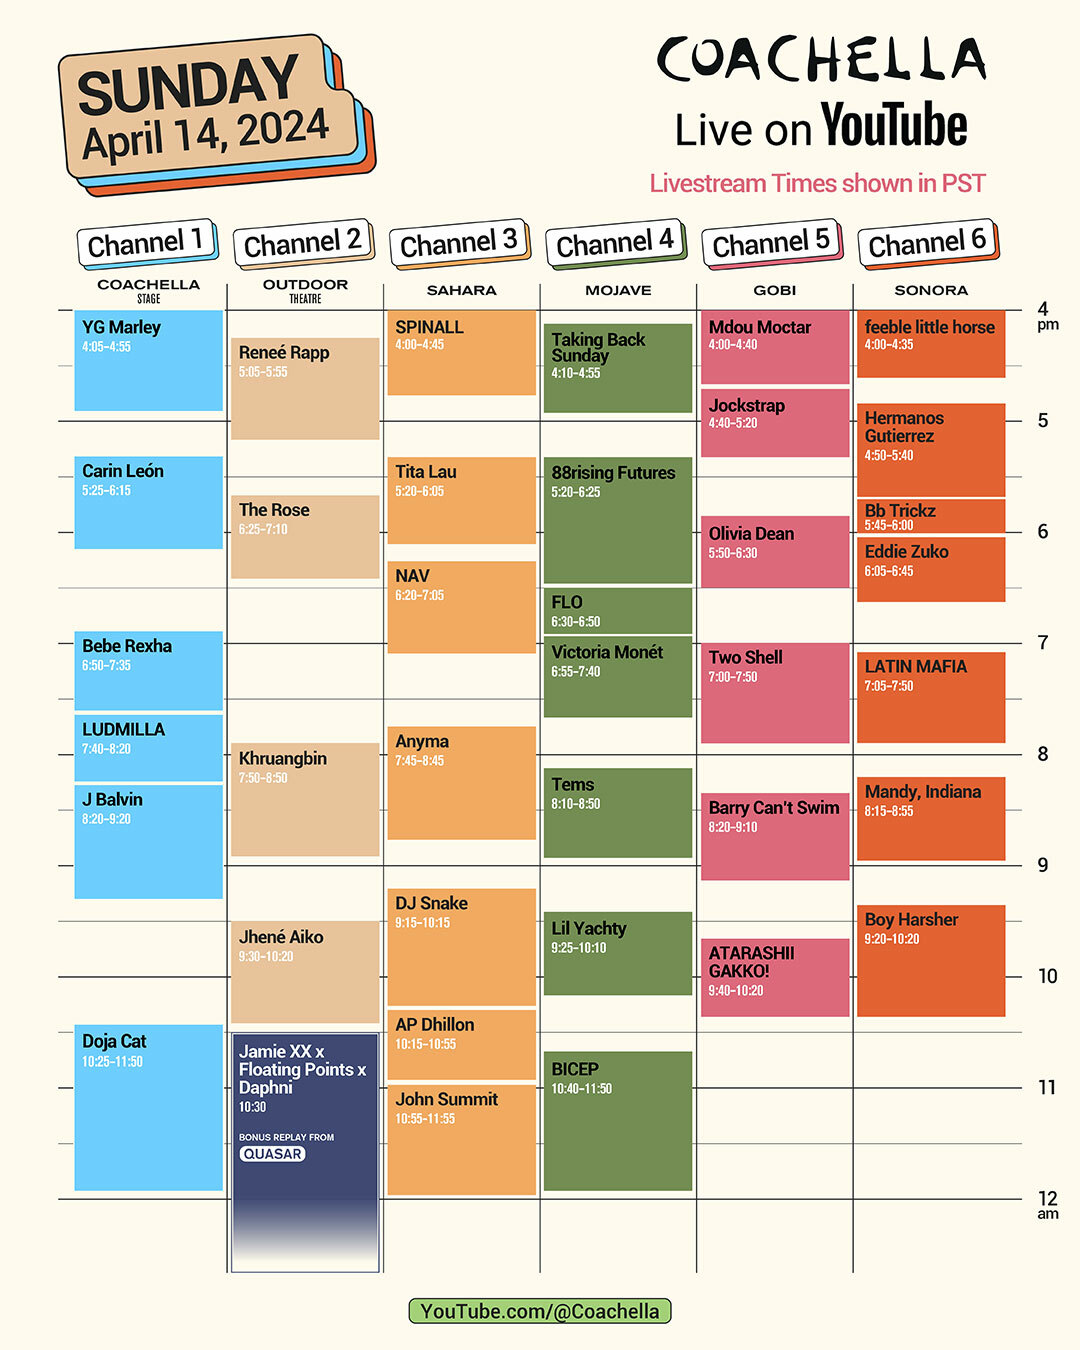 Coachella Sunday livestream schedule